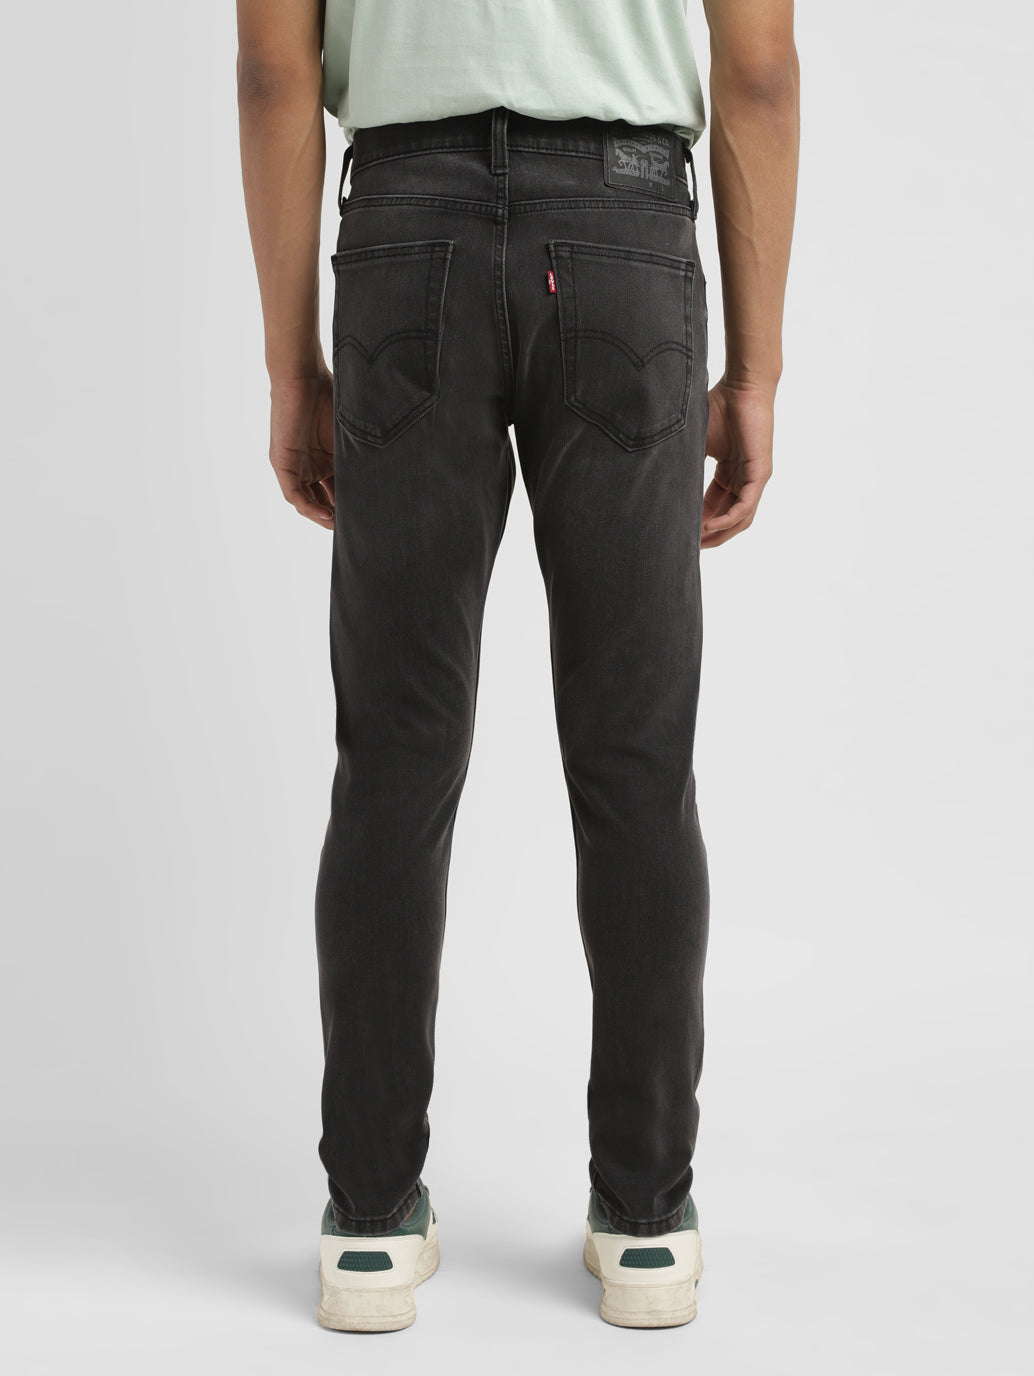 Men's Charcoal Skinny Taper Jeans